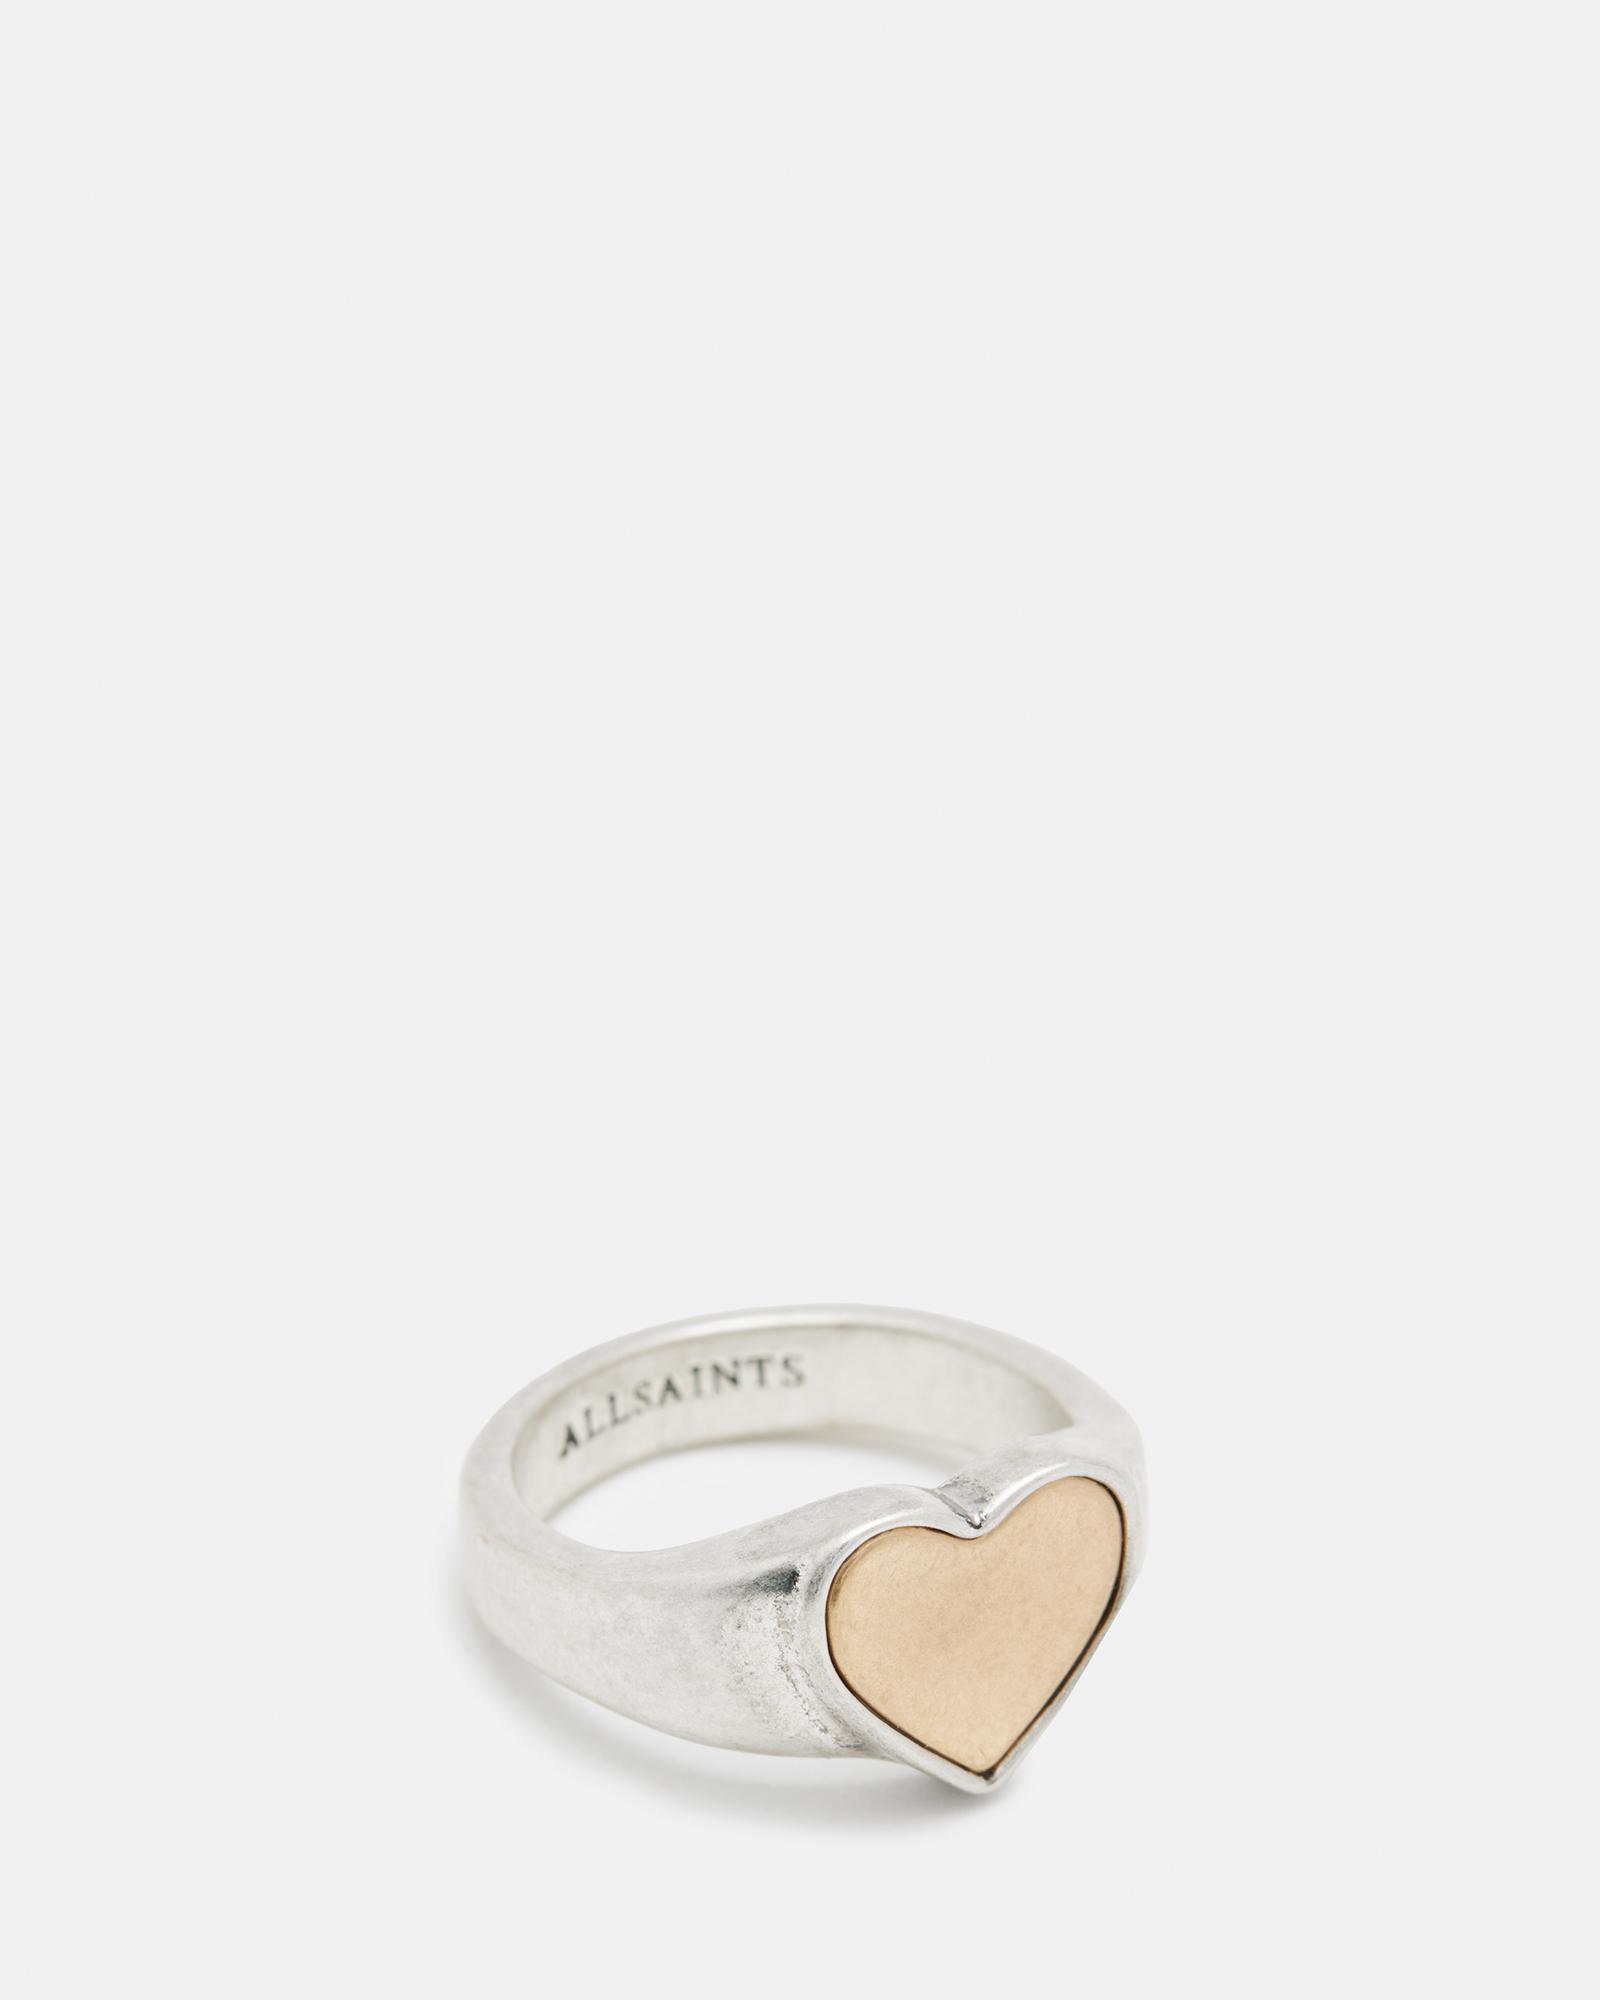 AllSaints Obi Two Tone Heart Shaped Ring,, WRM BRAS/WRM SLVER